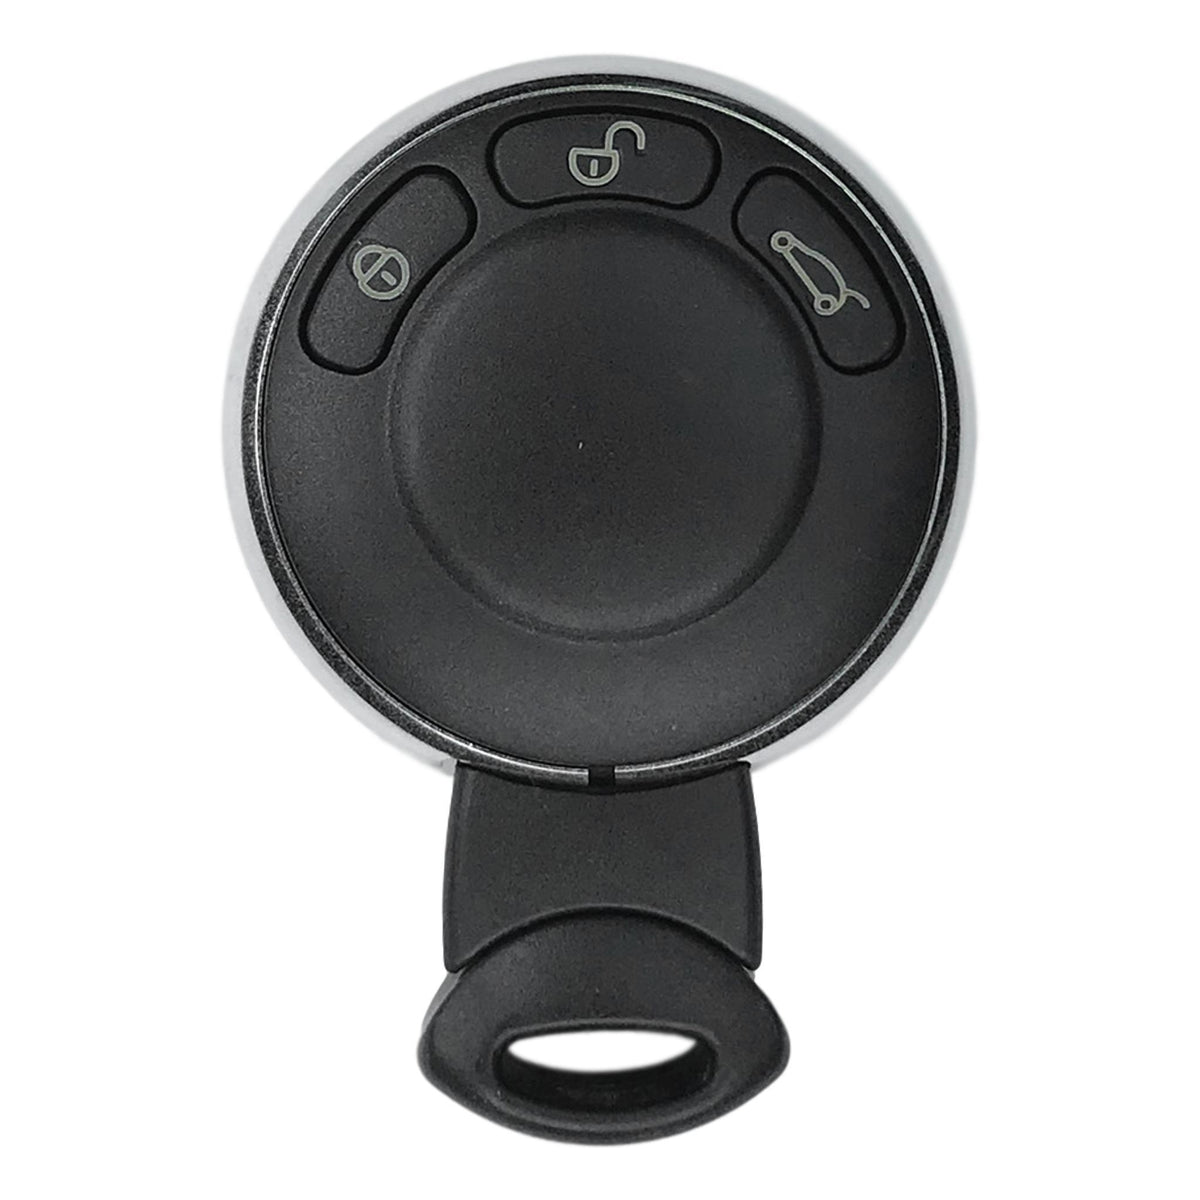 Mini Cooper 3 Button Smart Key 2006-2014 for IYZKEYR5602